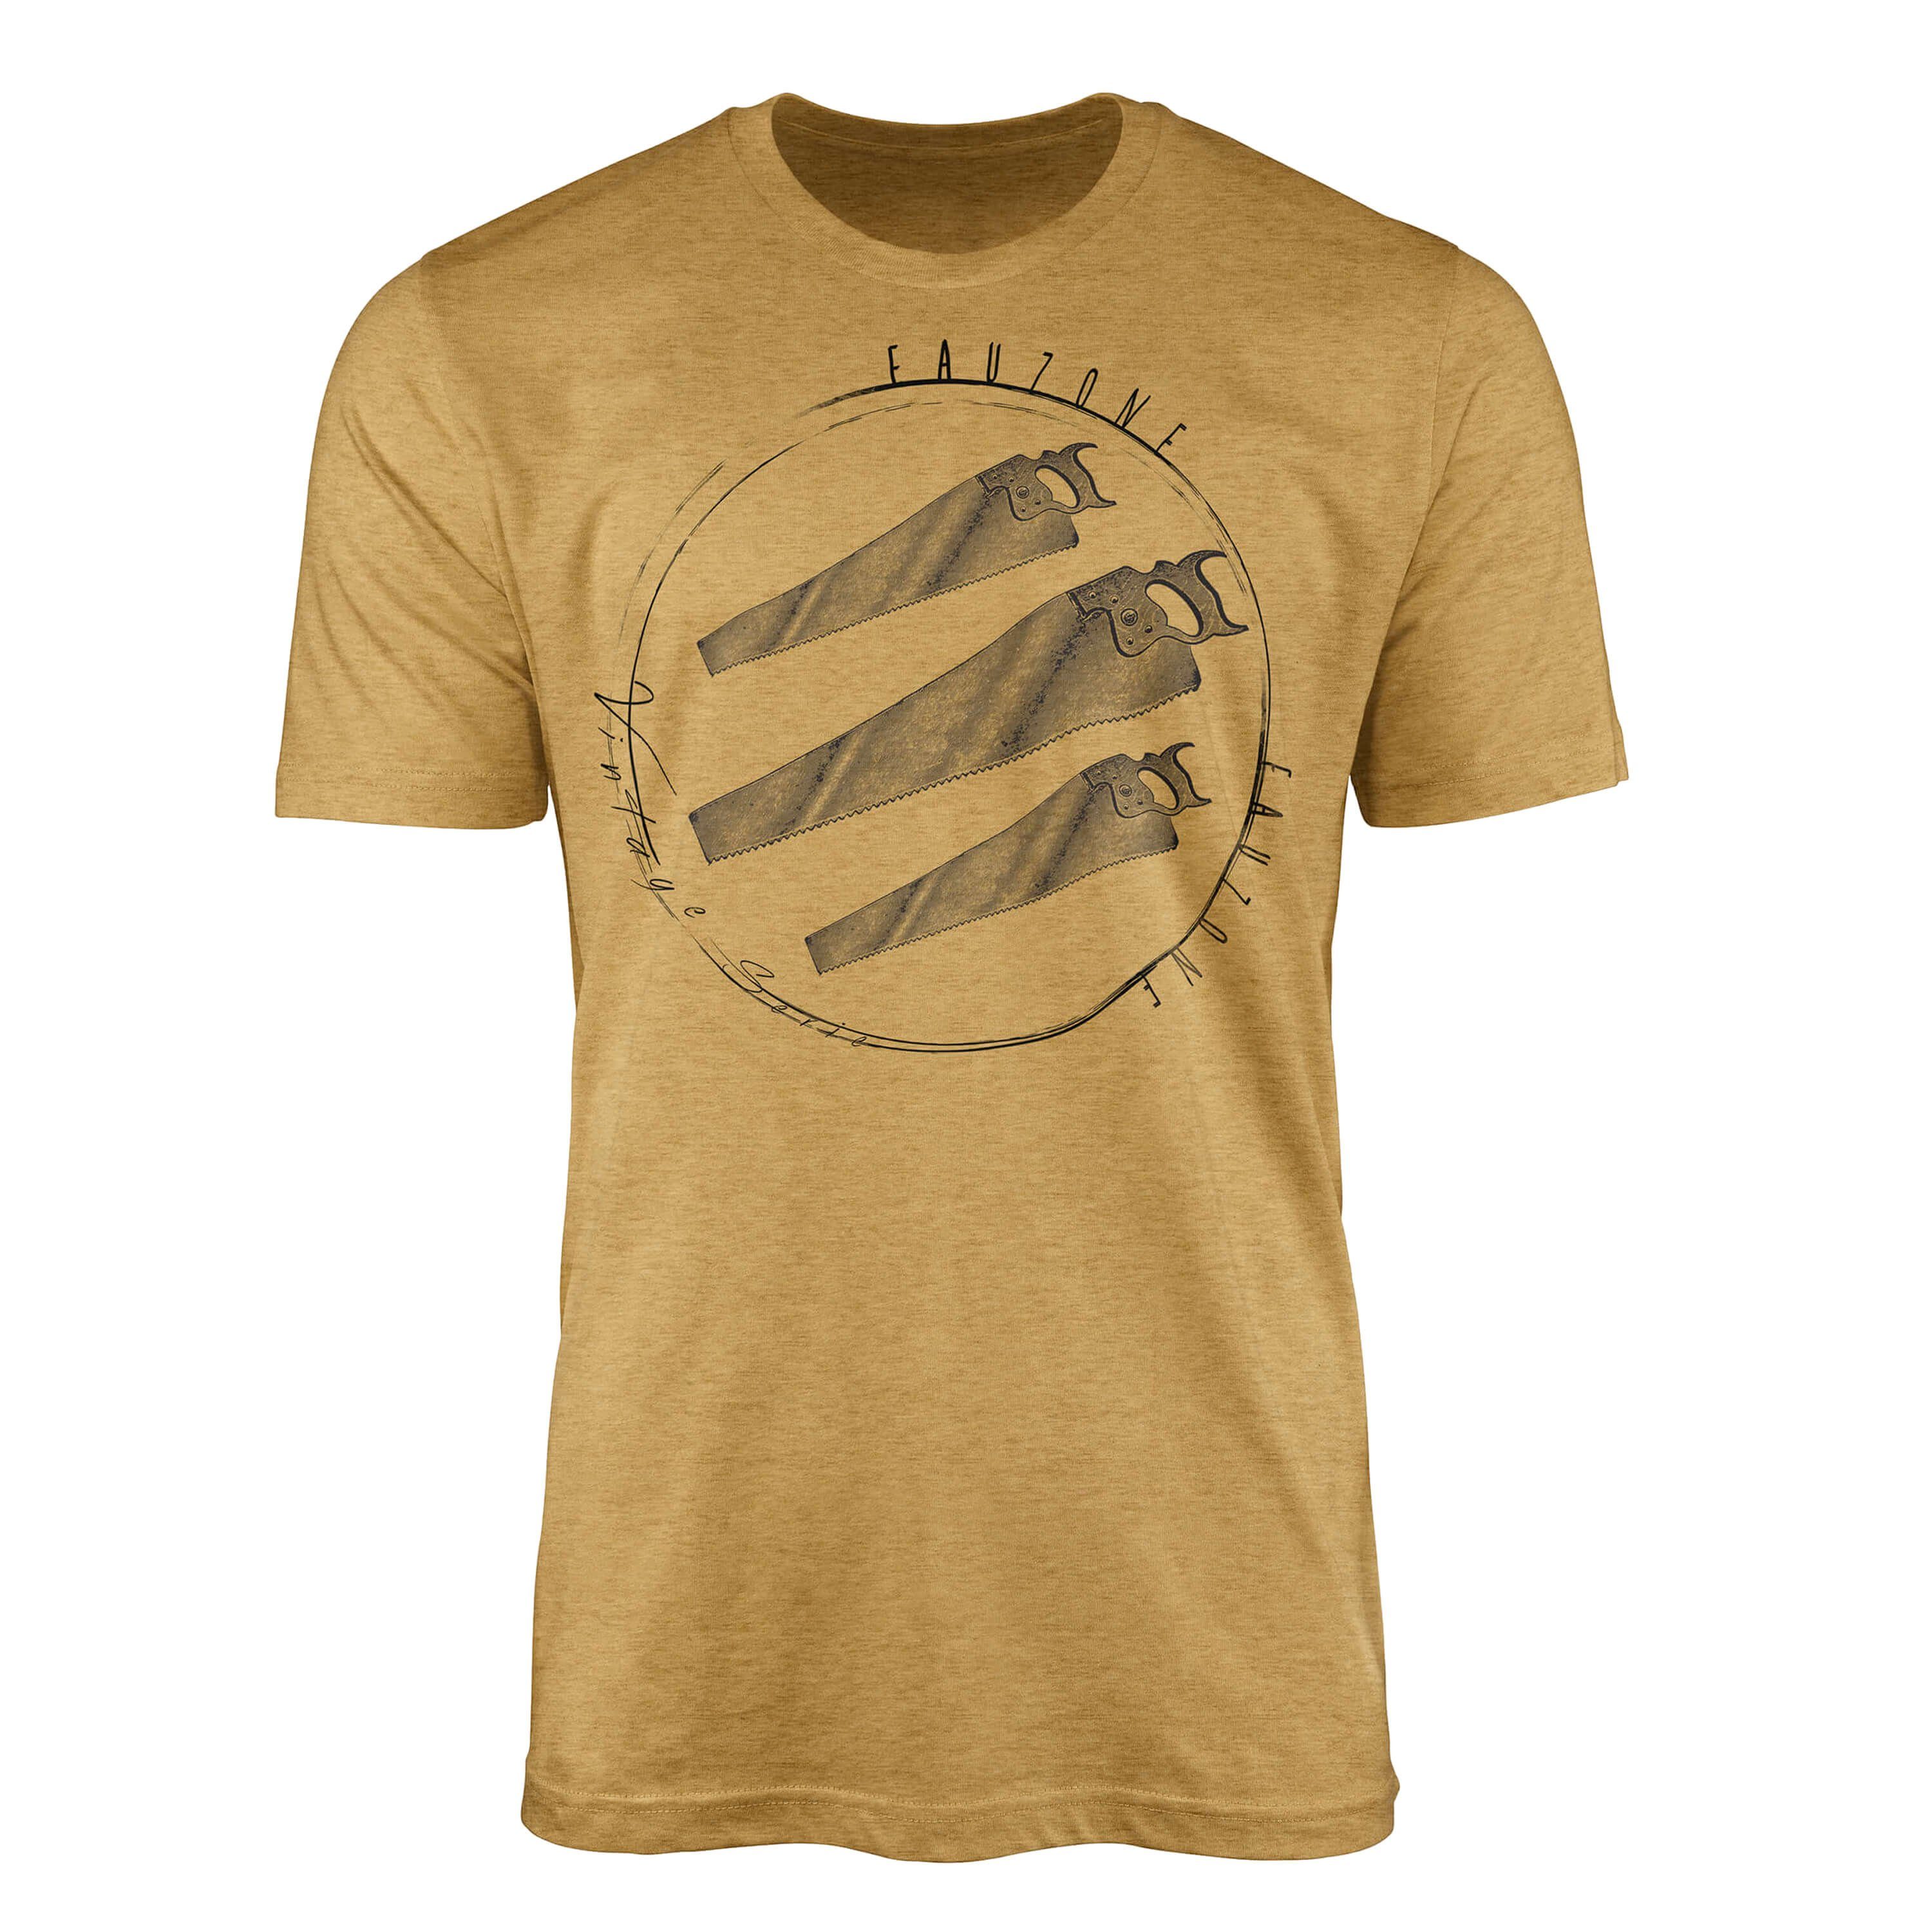 Sinus Art T-Shirt Vintage Herren T-Shirt Säge Antique Gold